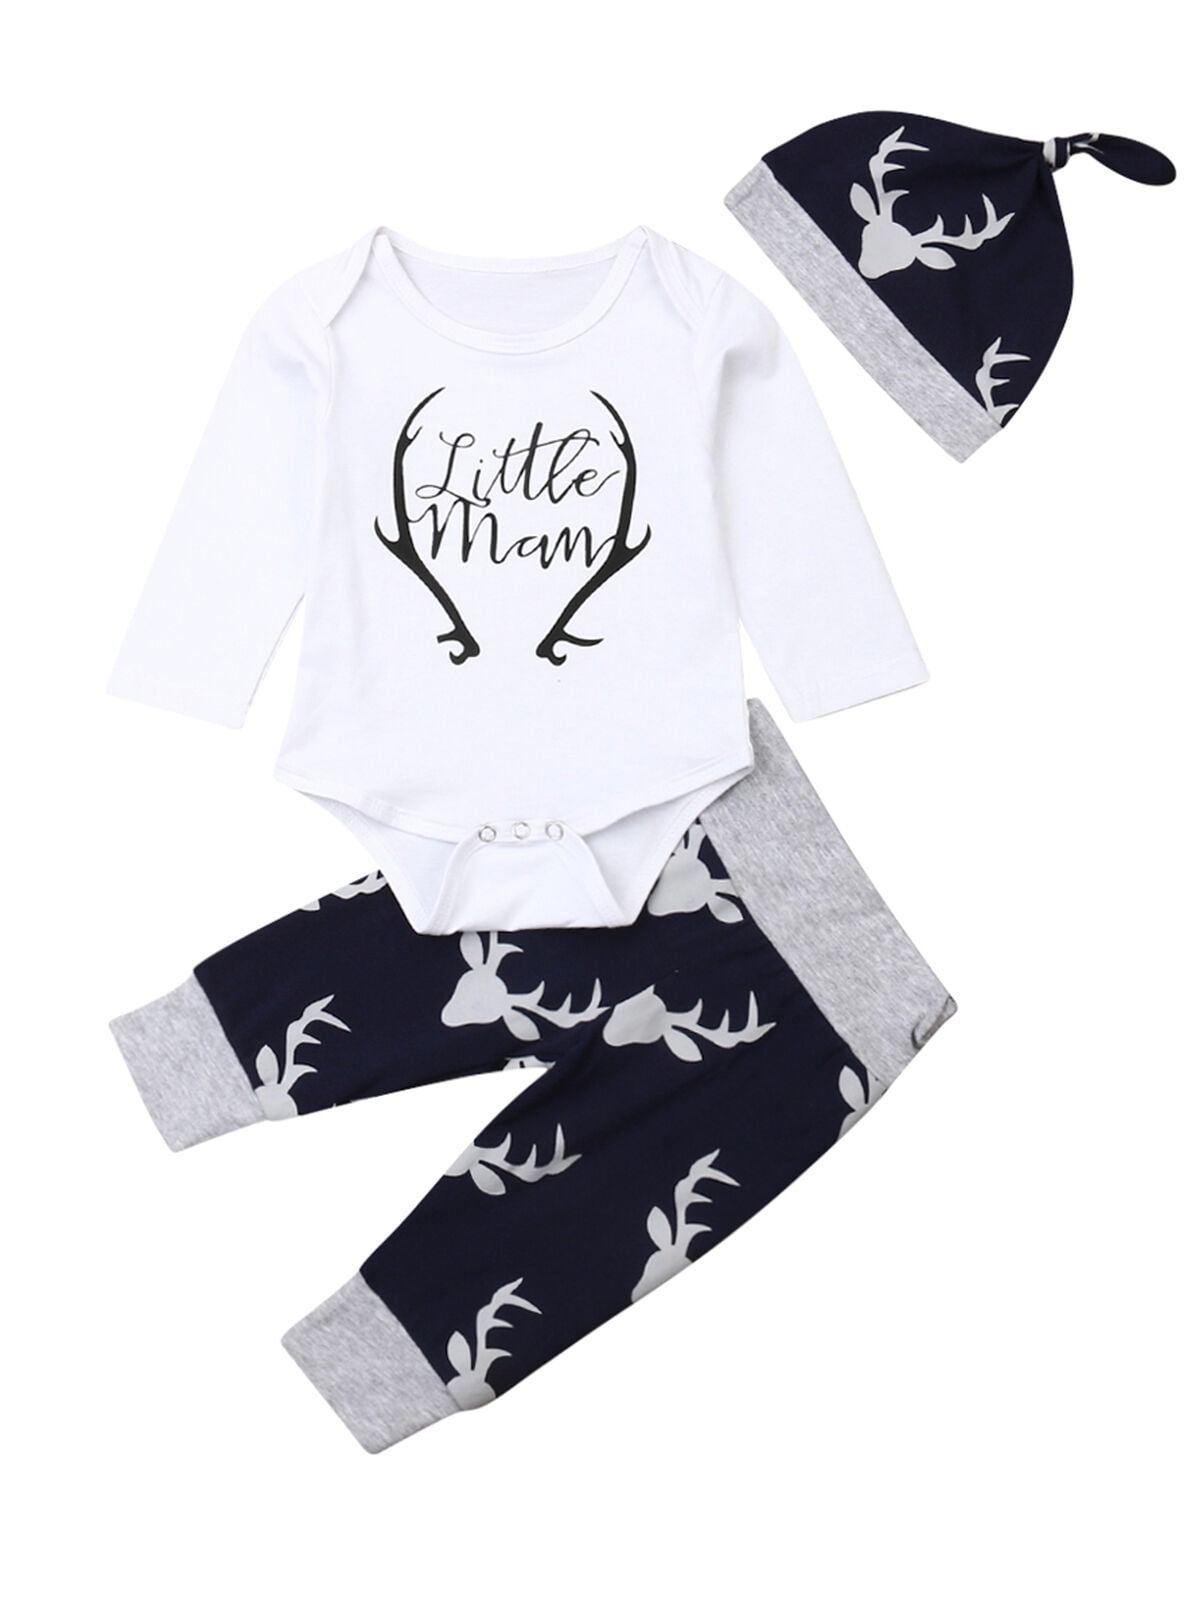 Pants Toddler Hoodies Outfit Set Newborn Baby Boy Deer Head Print Clothes Set Infant Top